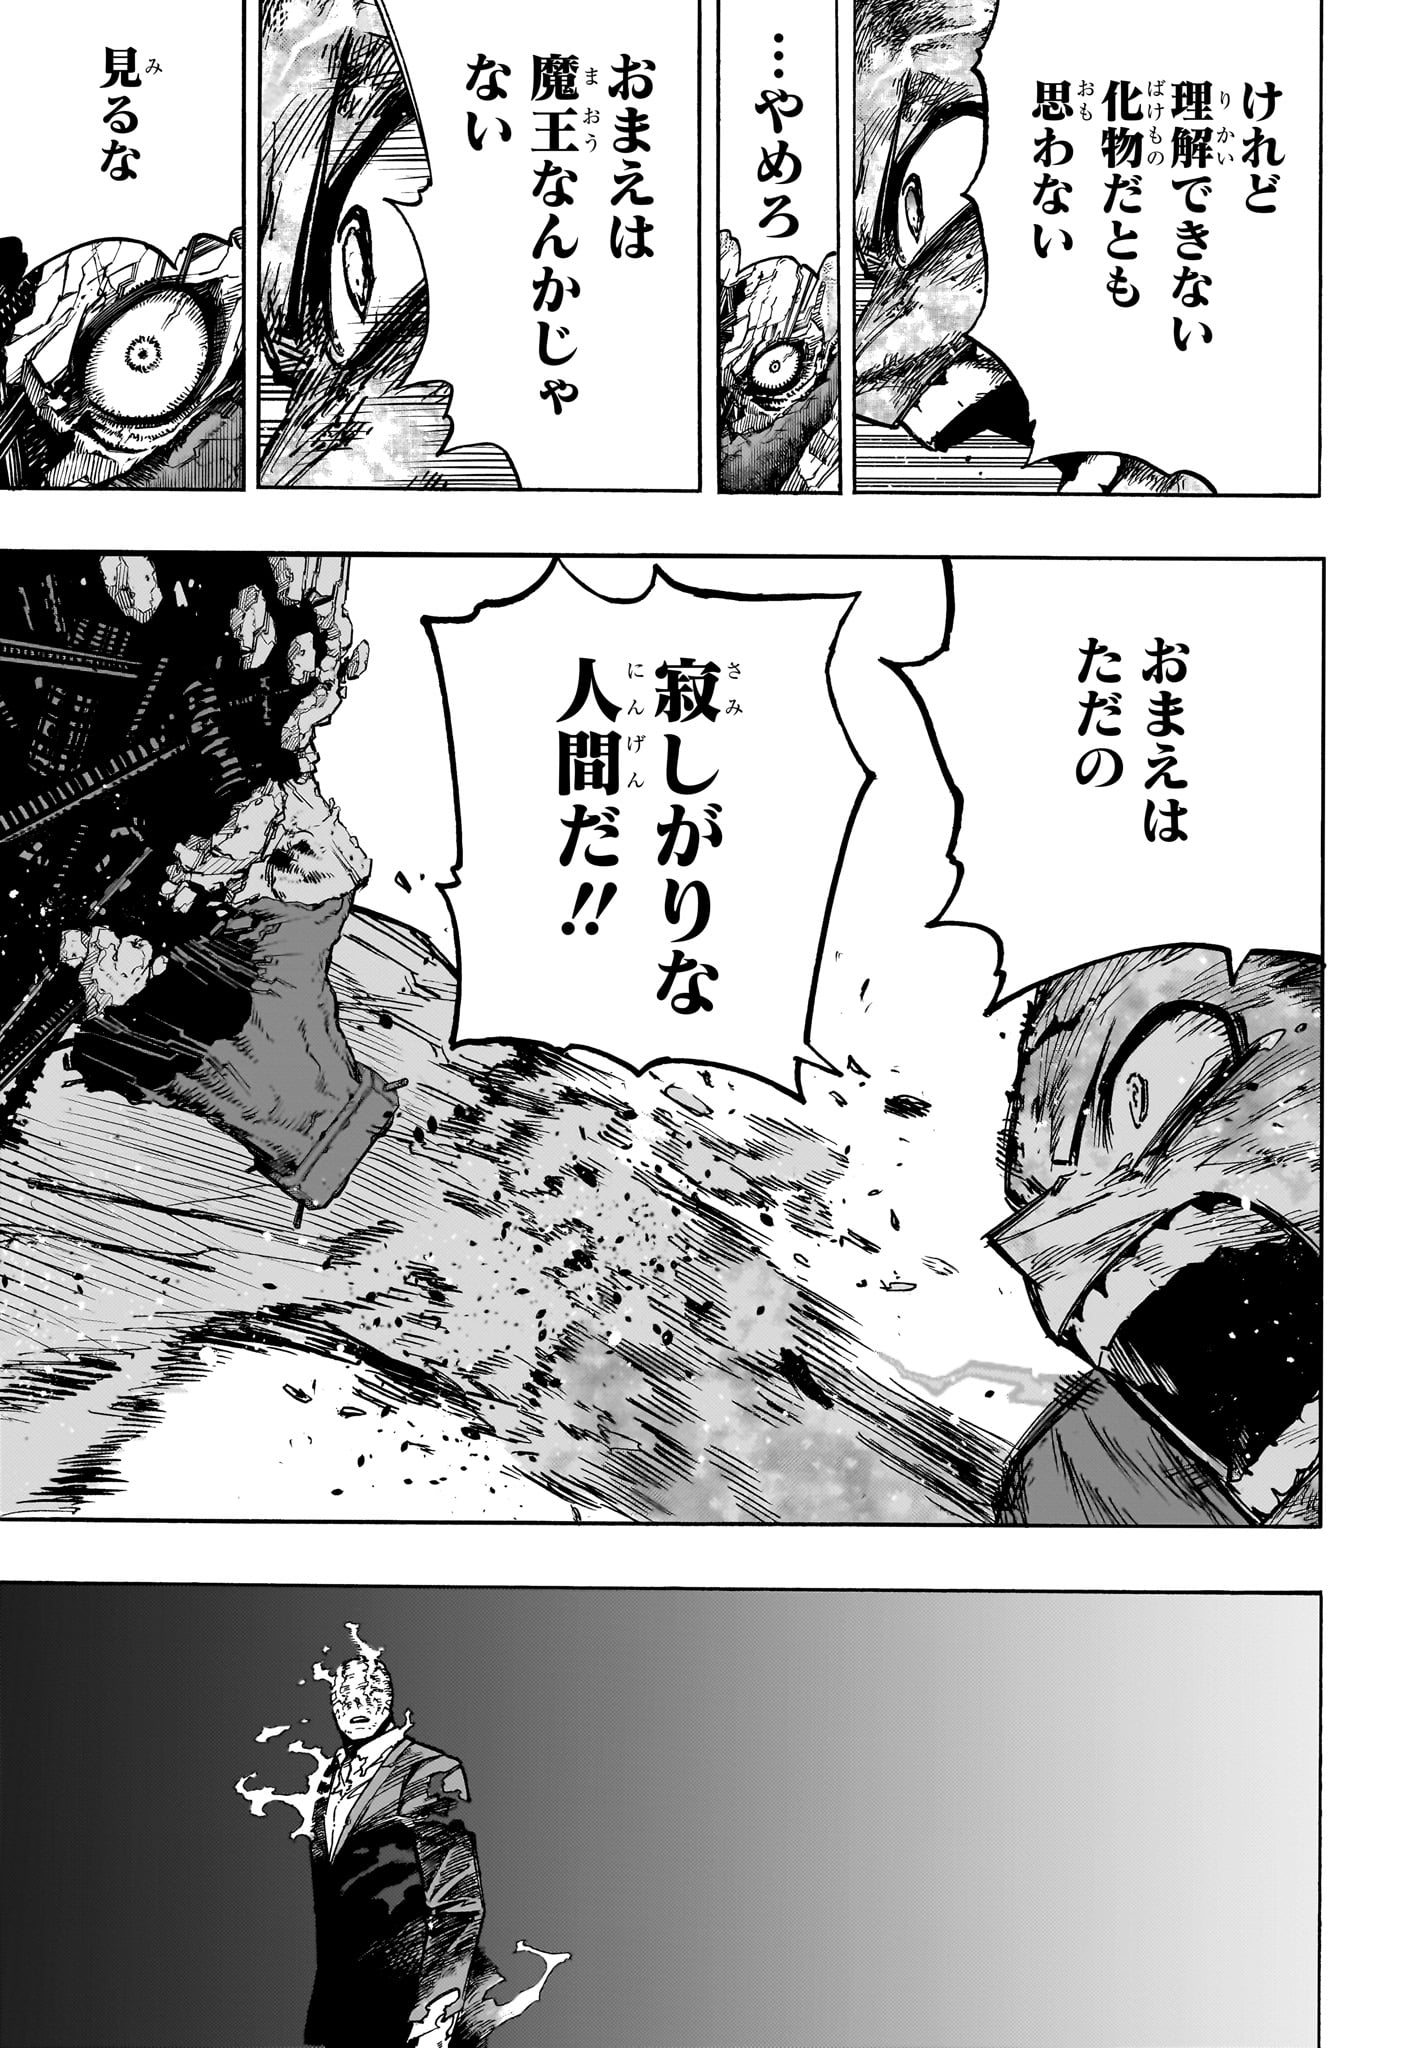 Boku no Hero Academia - Chapter 423 - Page 9